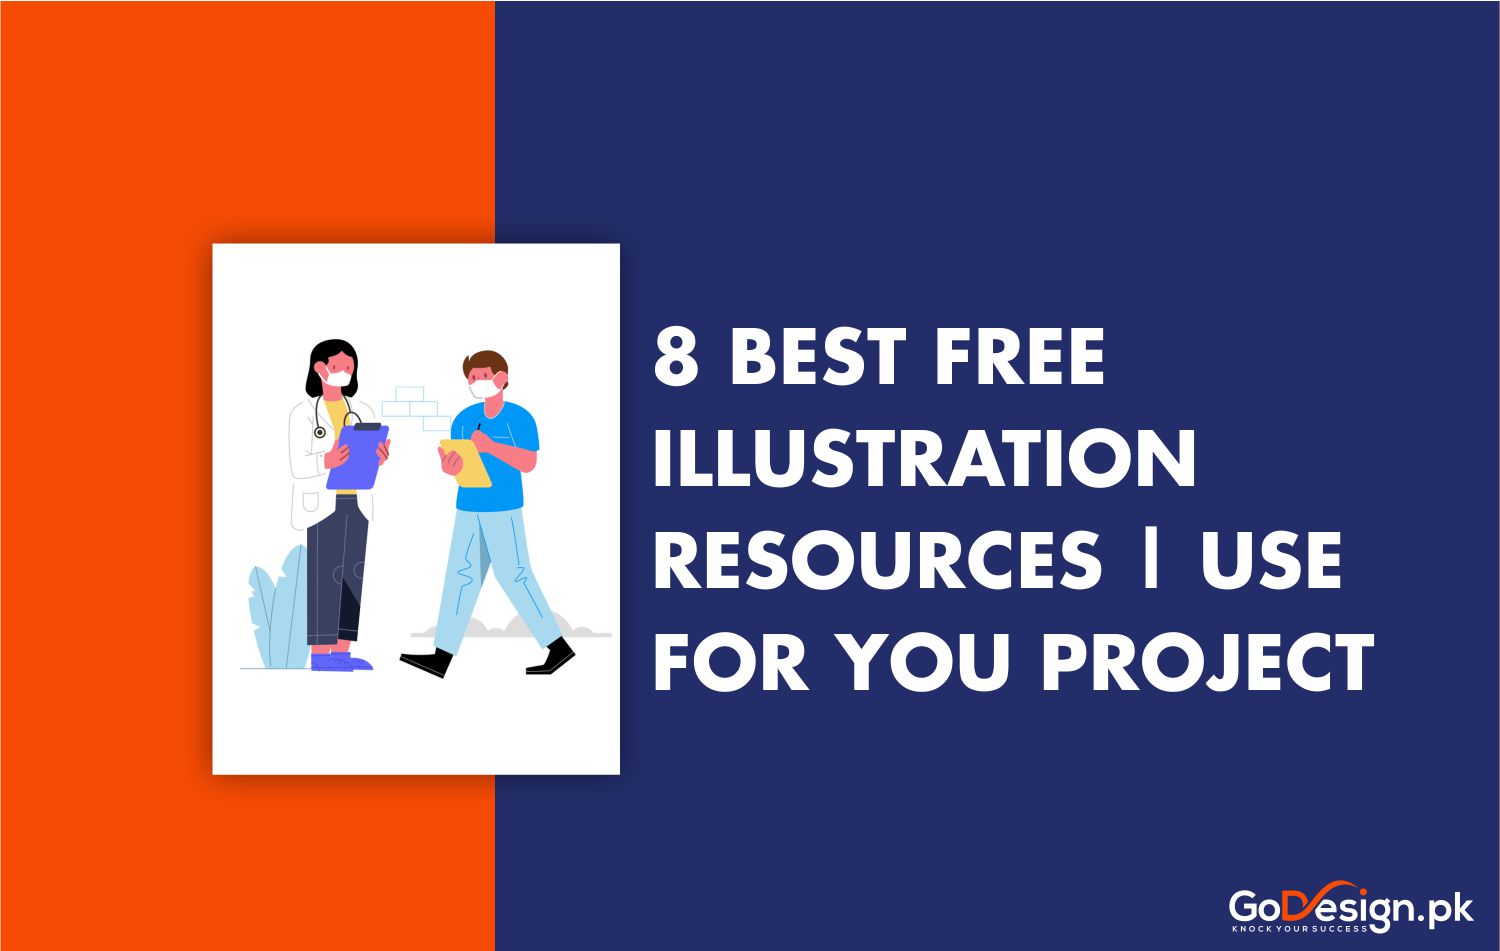 8 best free illustration resources